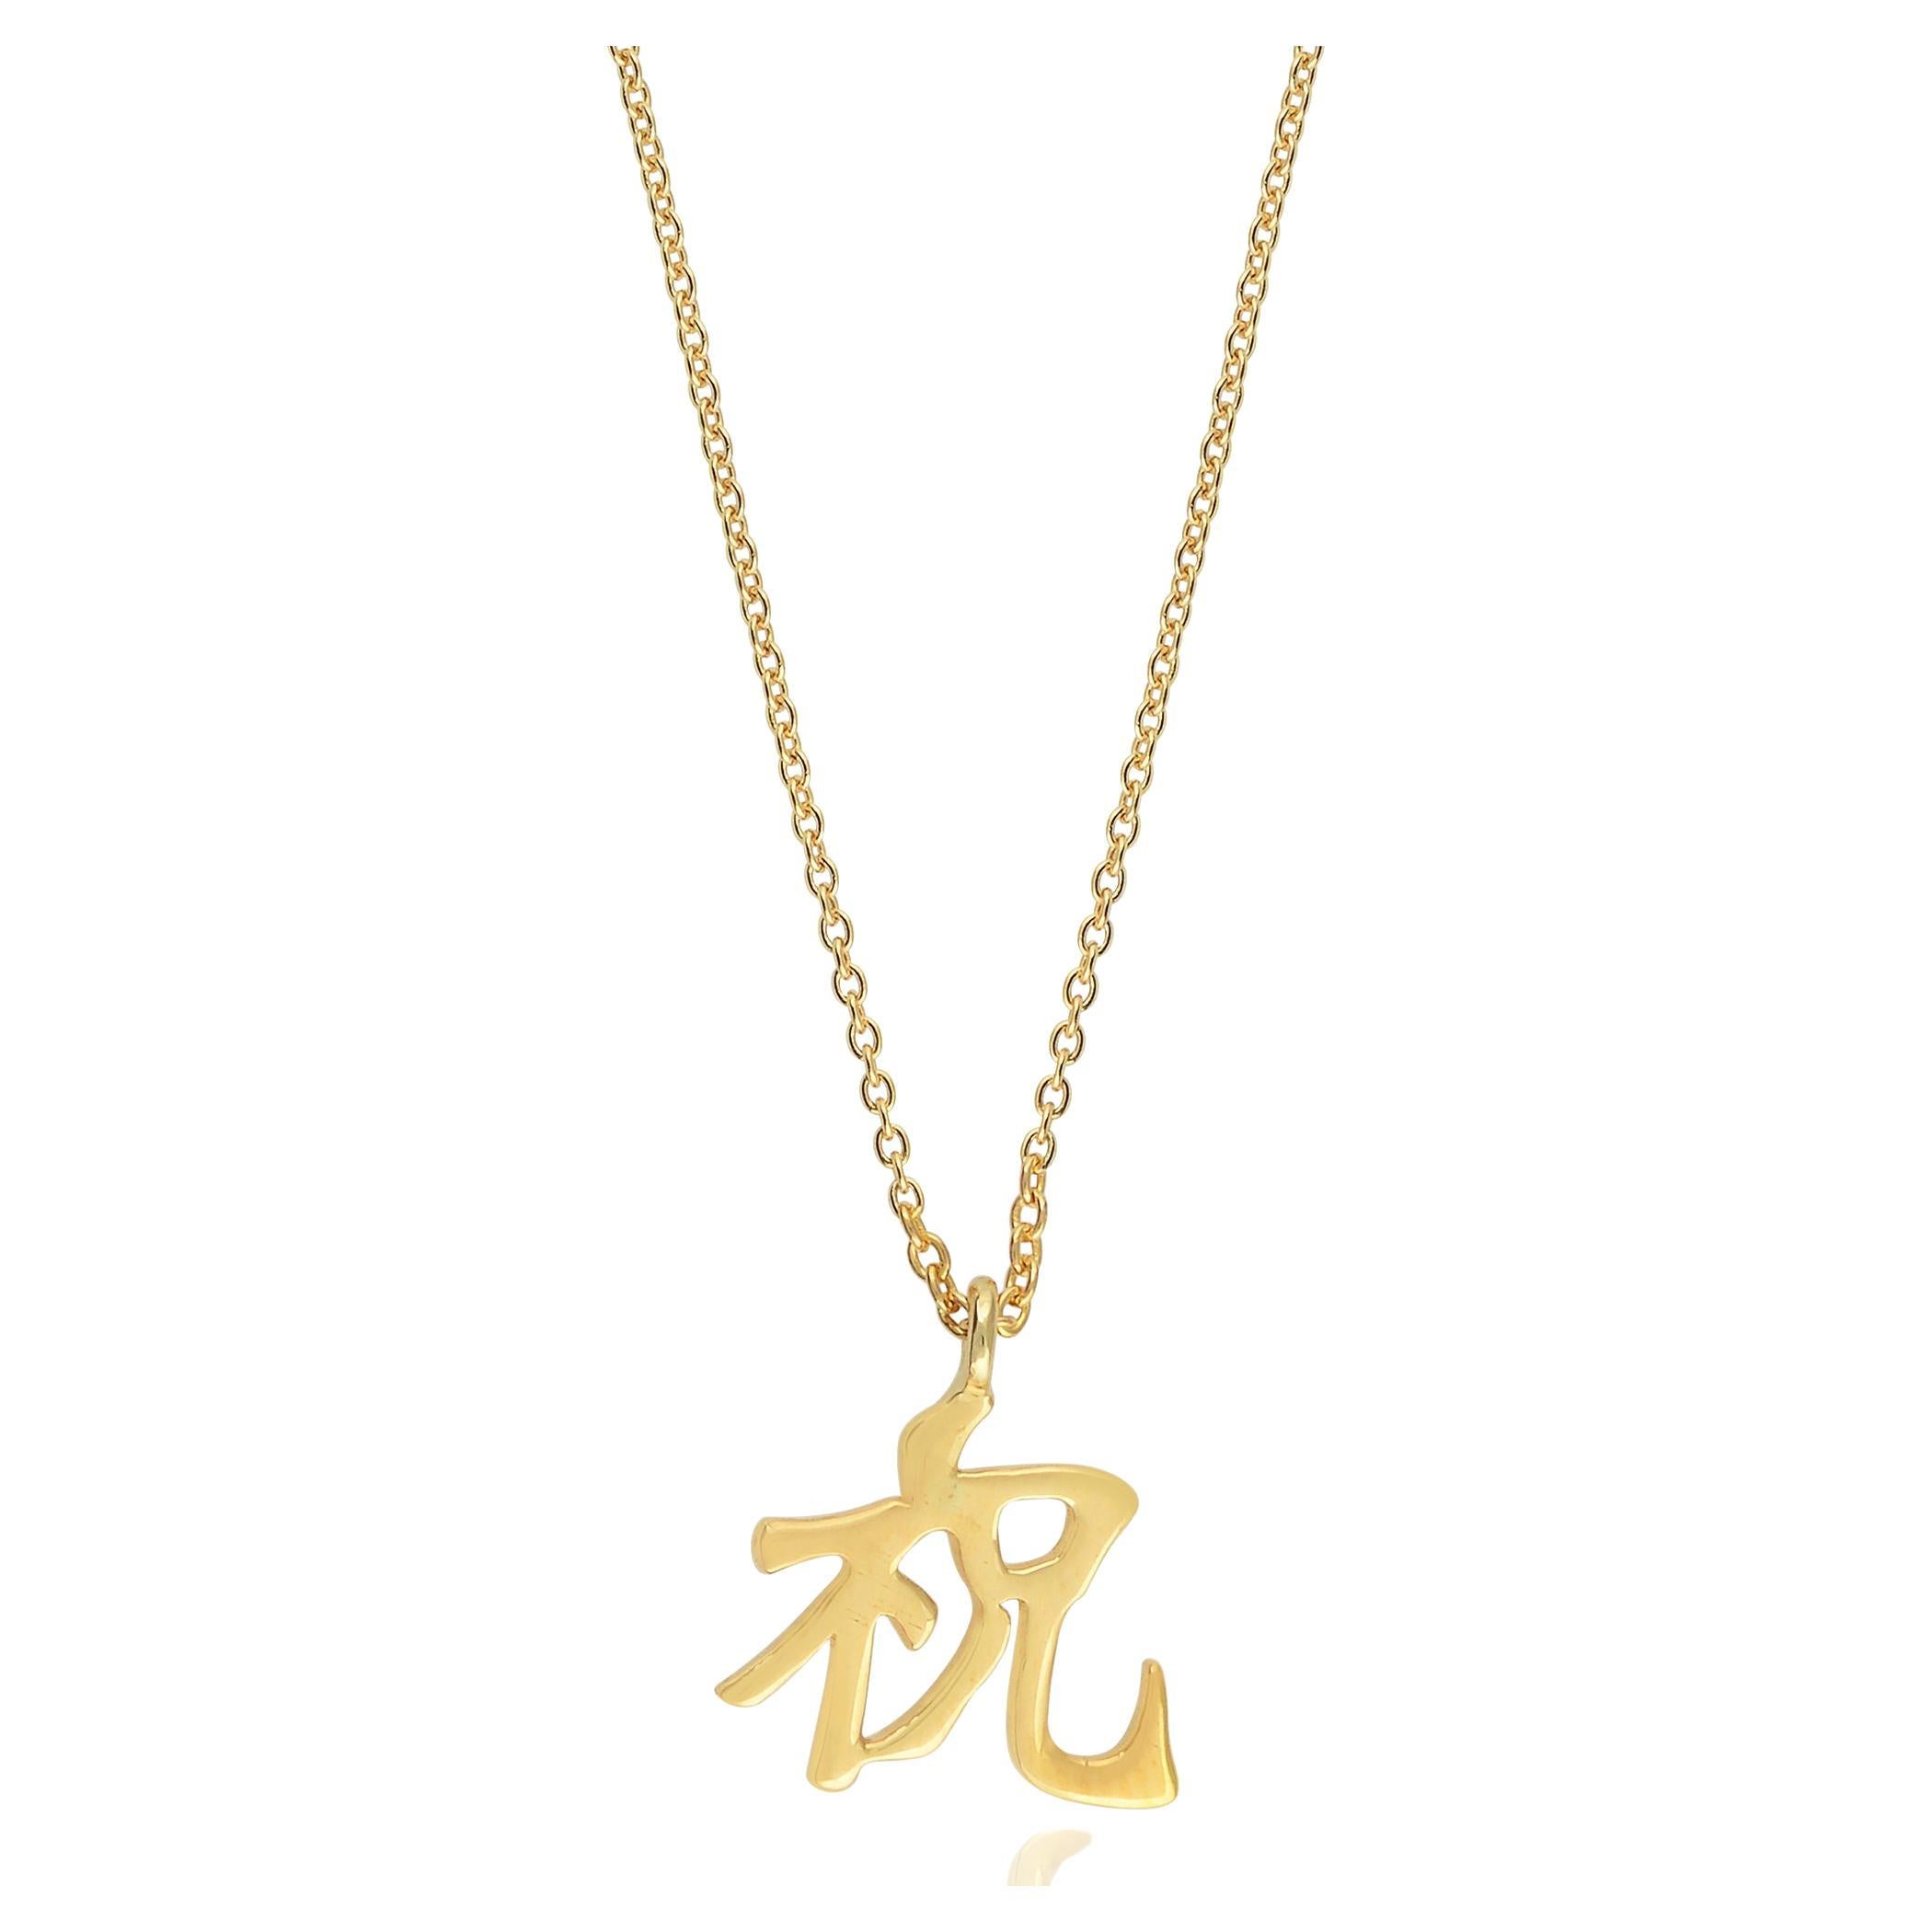 Solid 14k Yellow Gold Japanese Kanji Celebration Symbol Pendant Necklace Jewelry For Sale